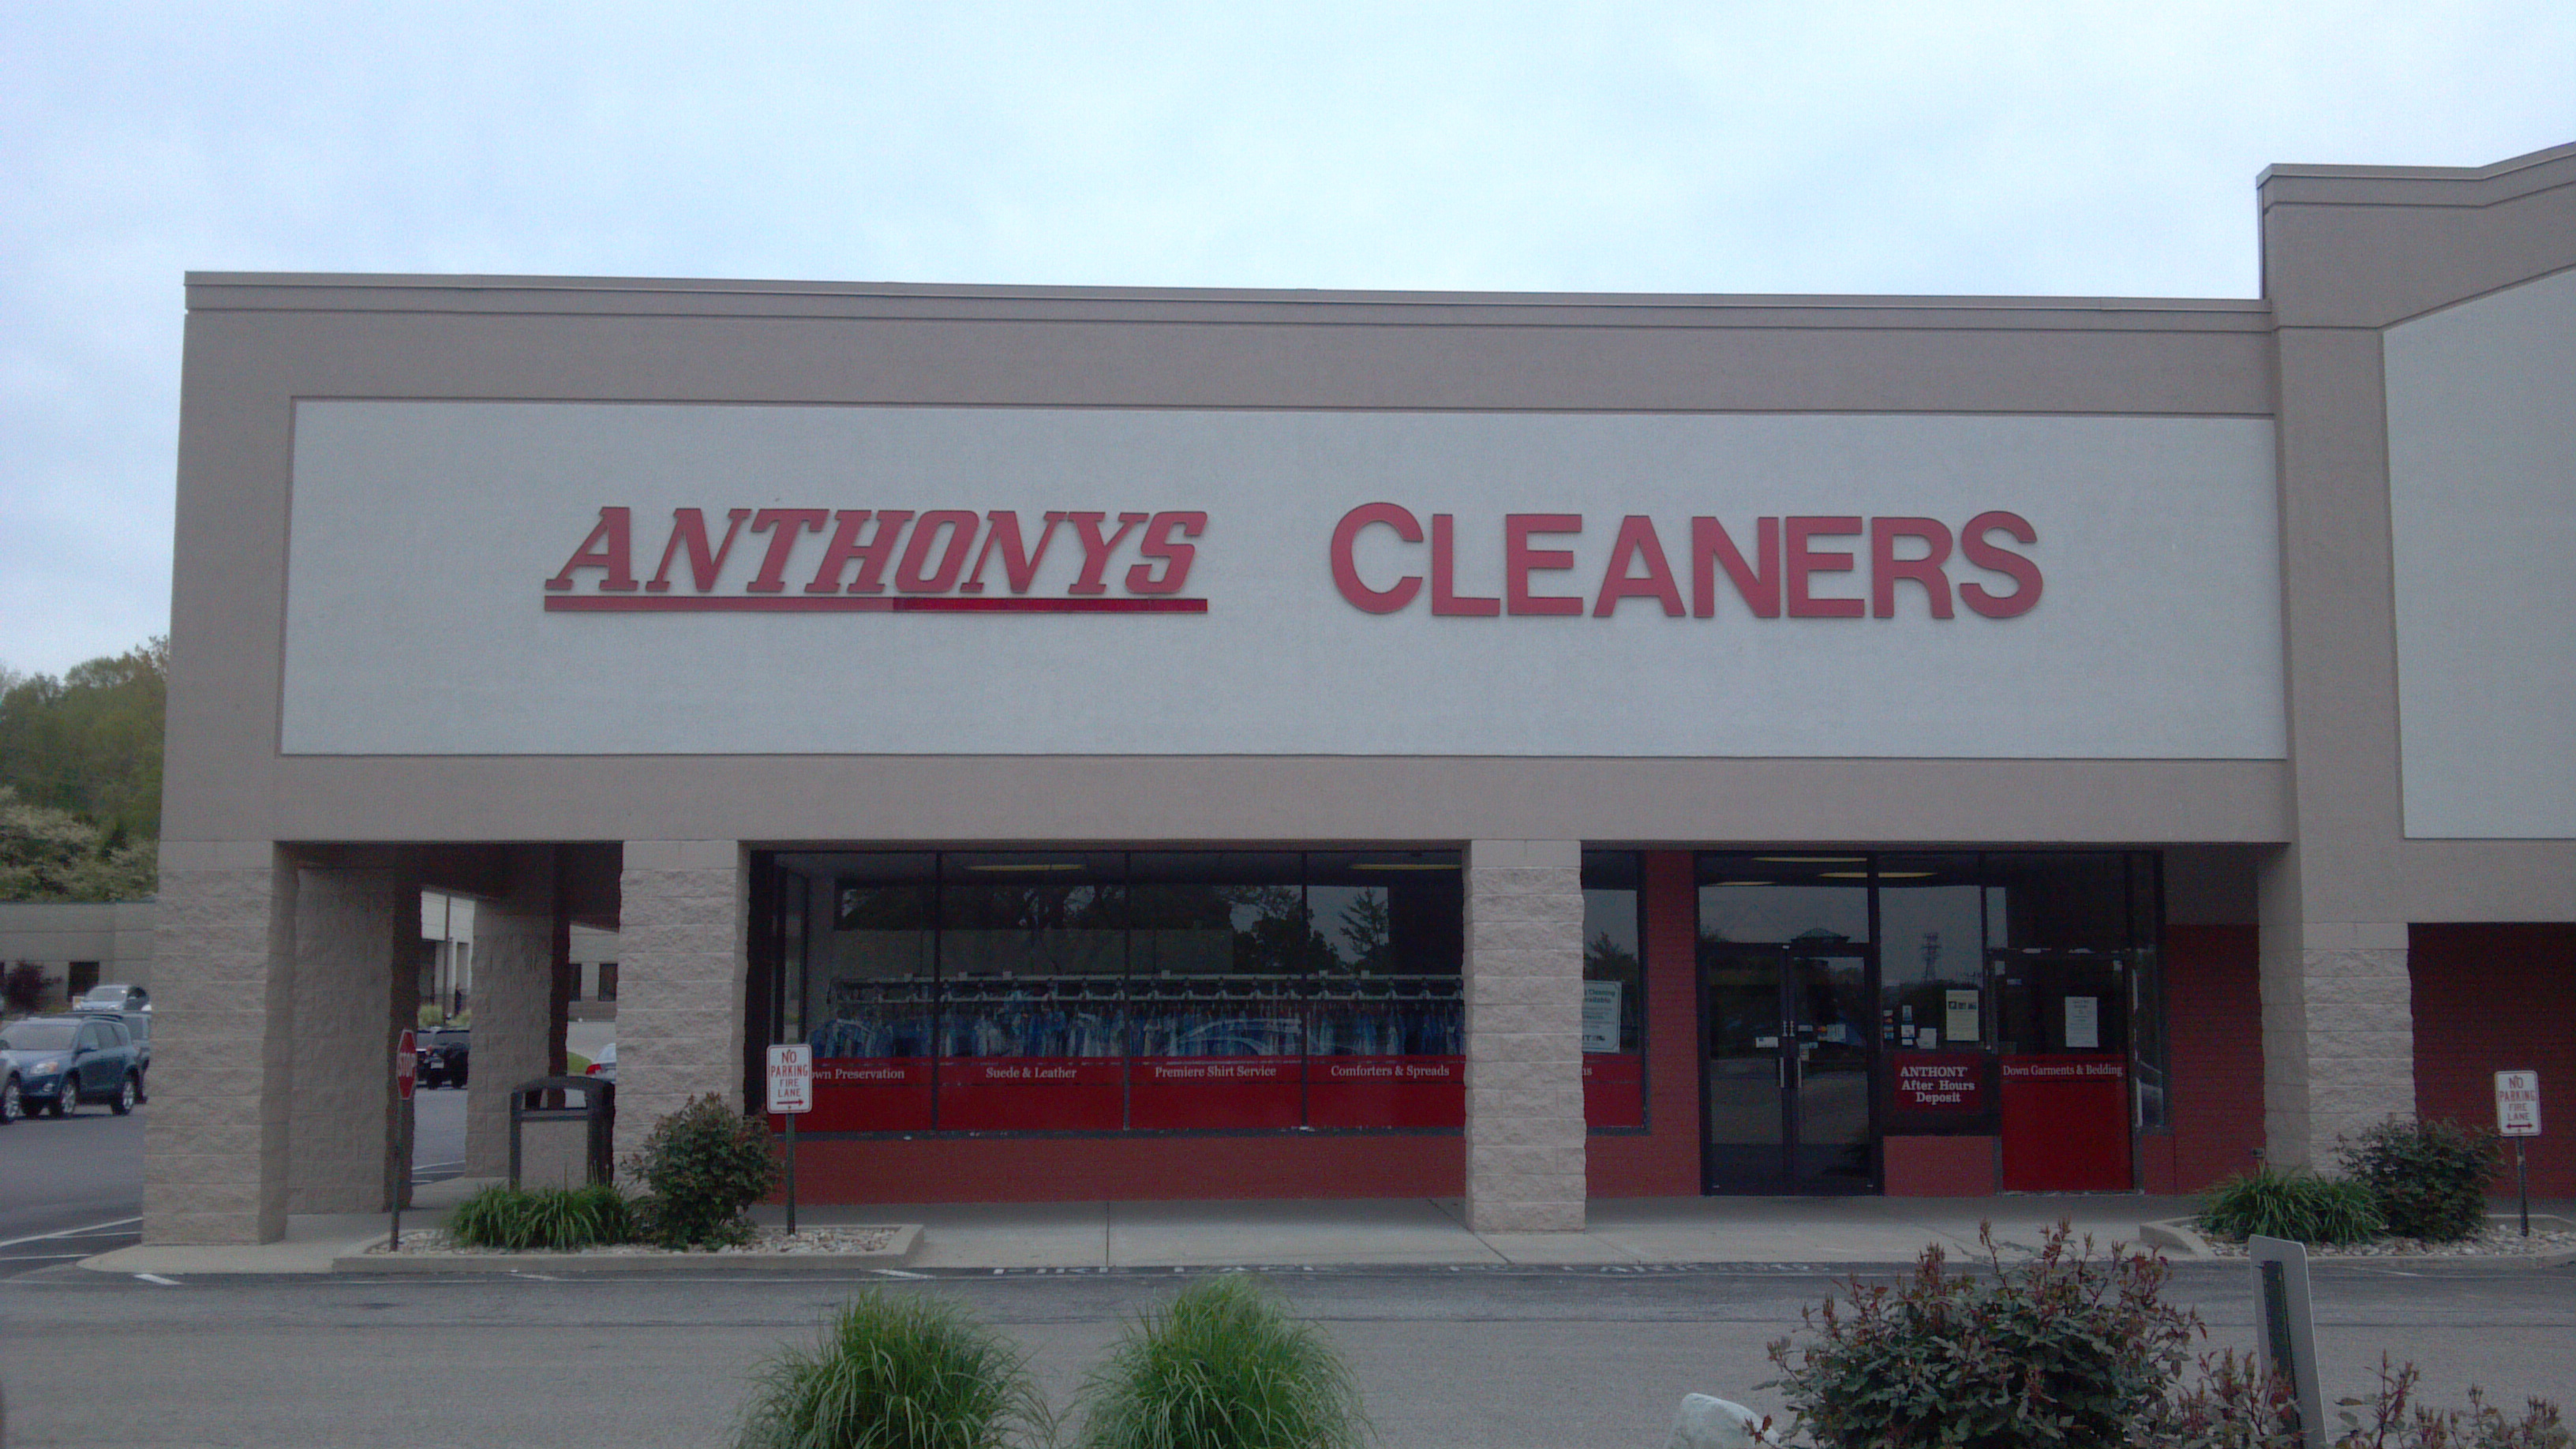 Anthonys Cleaners Cincinnati (513)563-6125